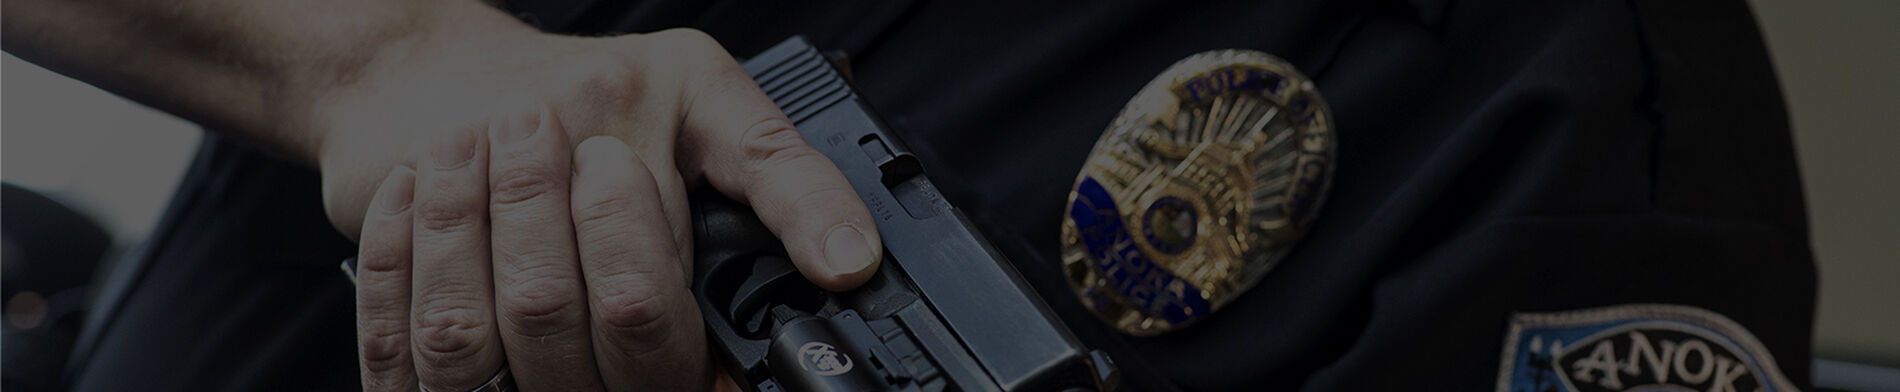 police holding a handgun